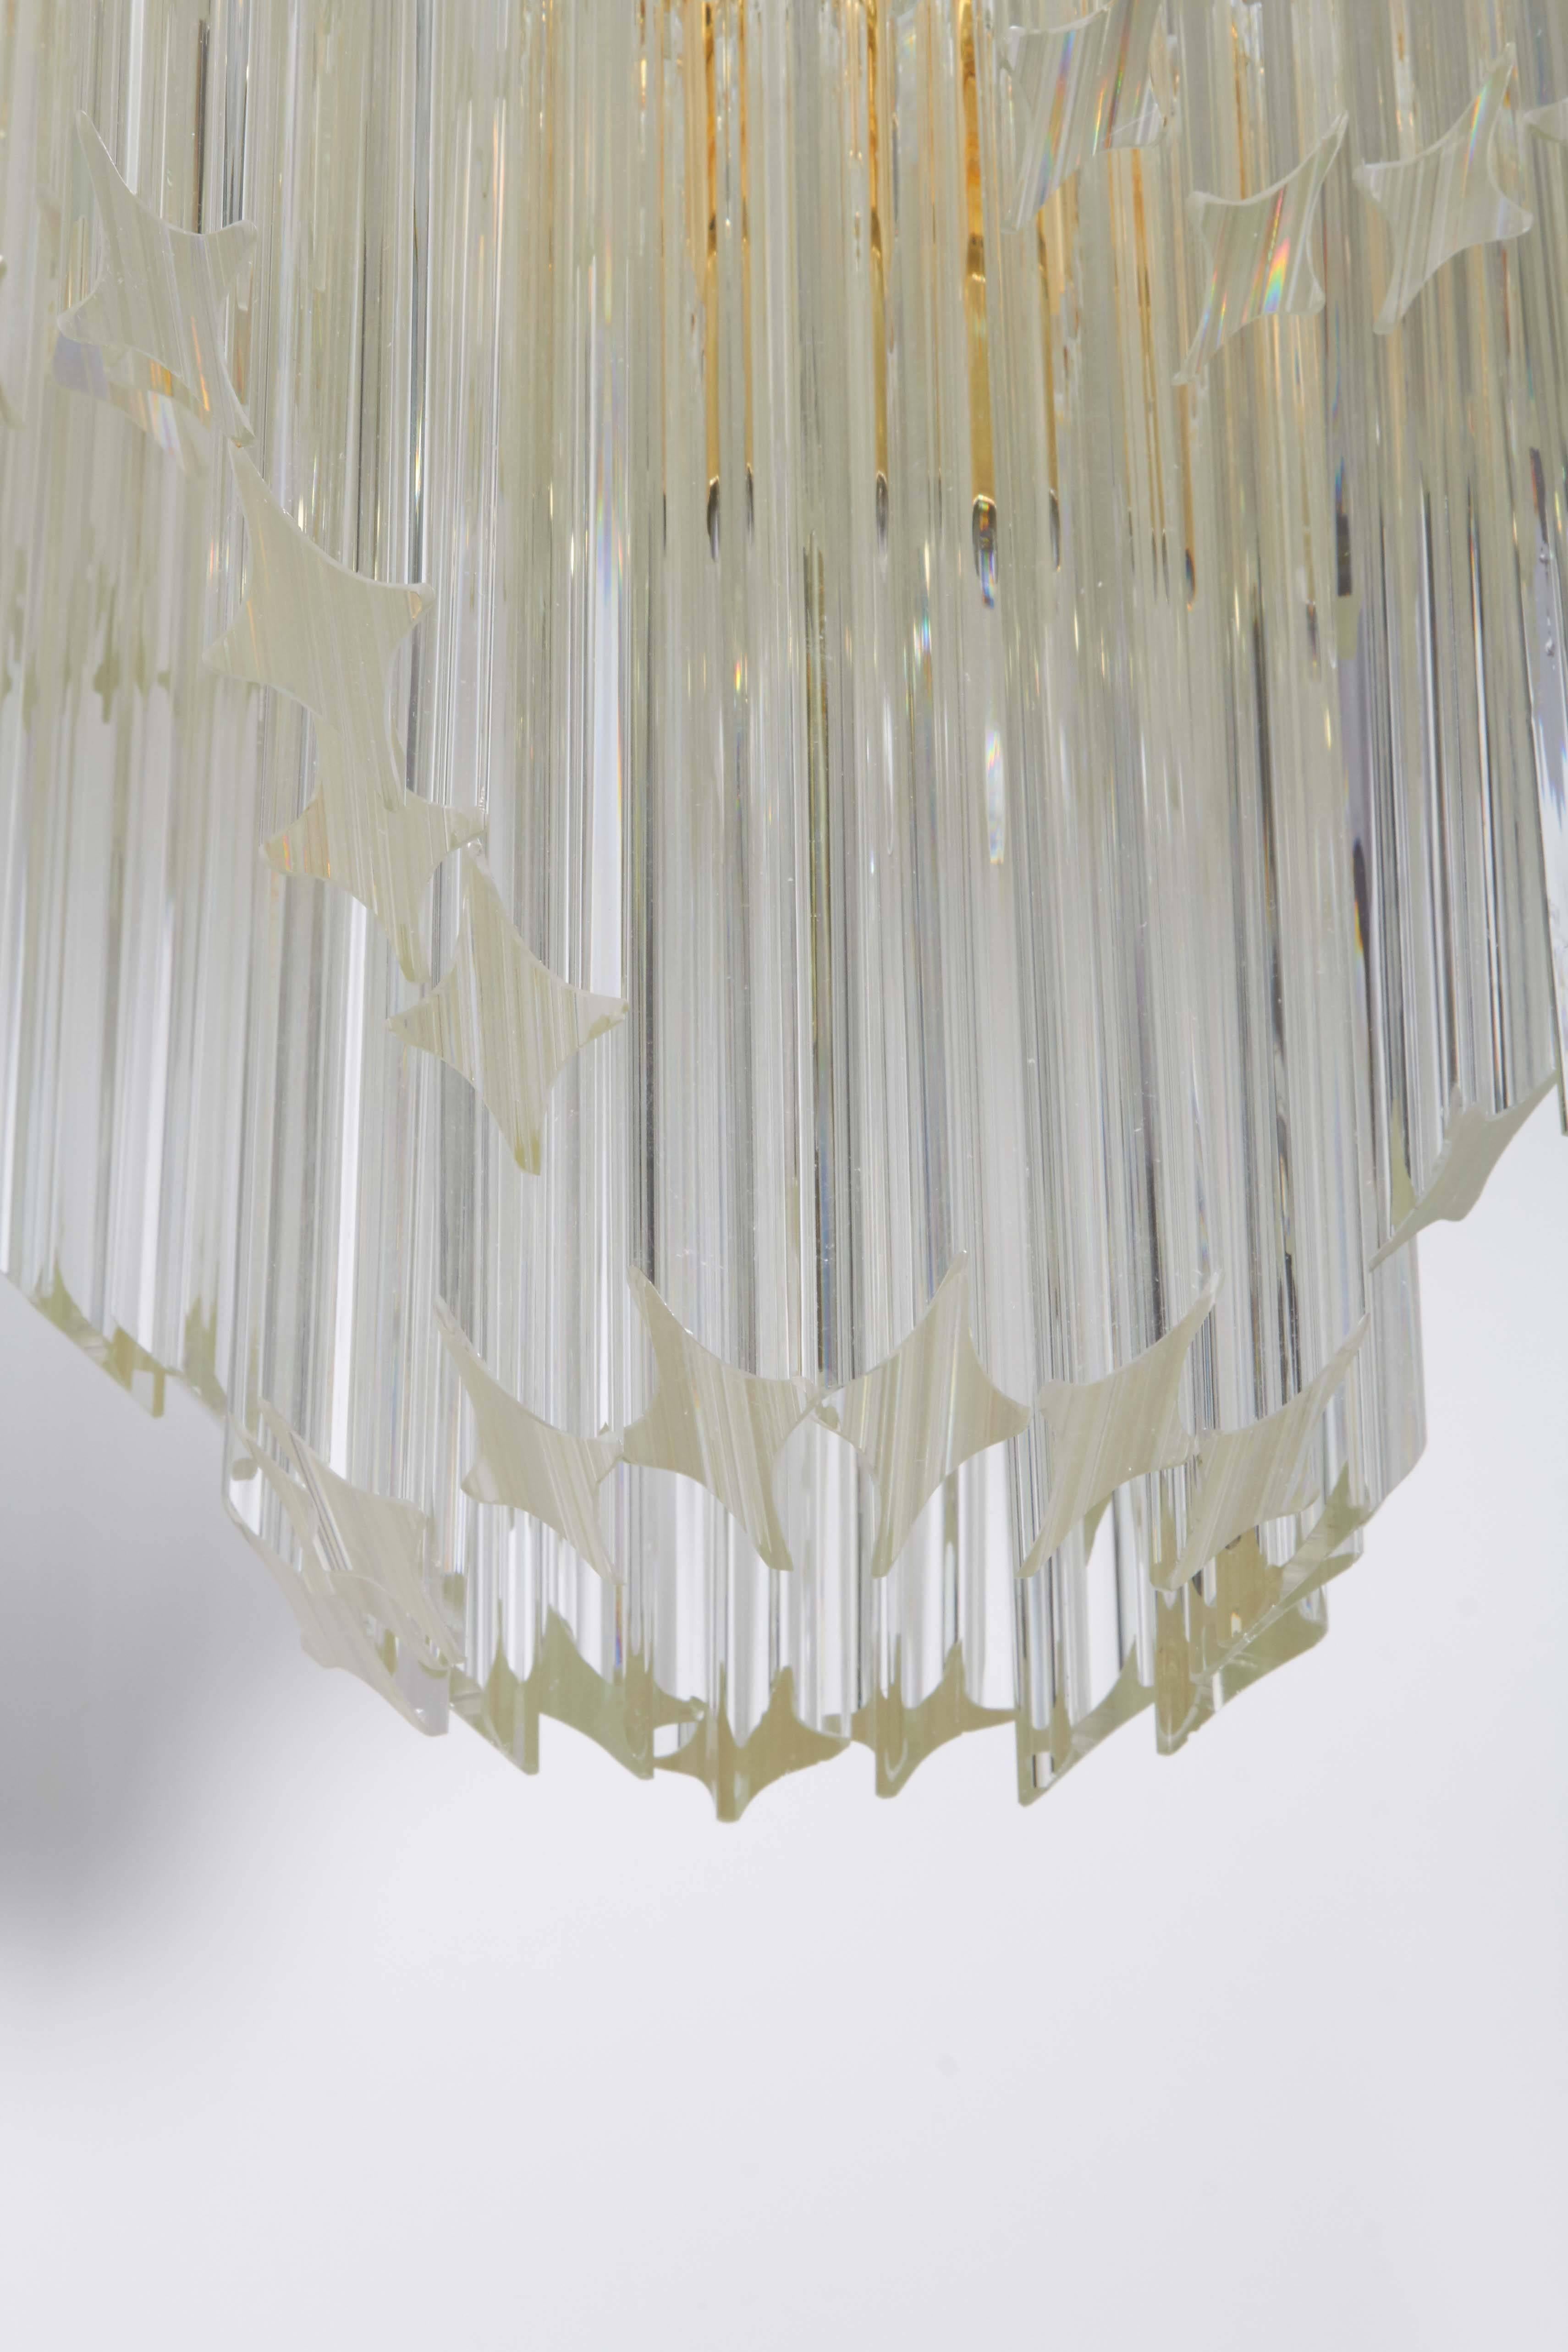 Venini Modern Chandelier with Murano Glass Quatro Punta Prisms 3